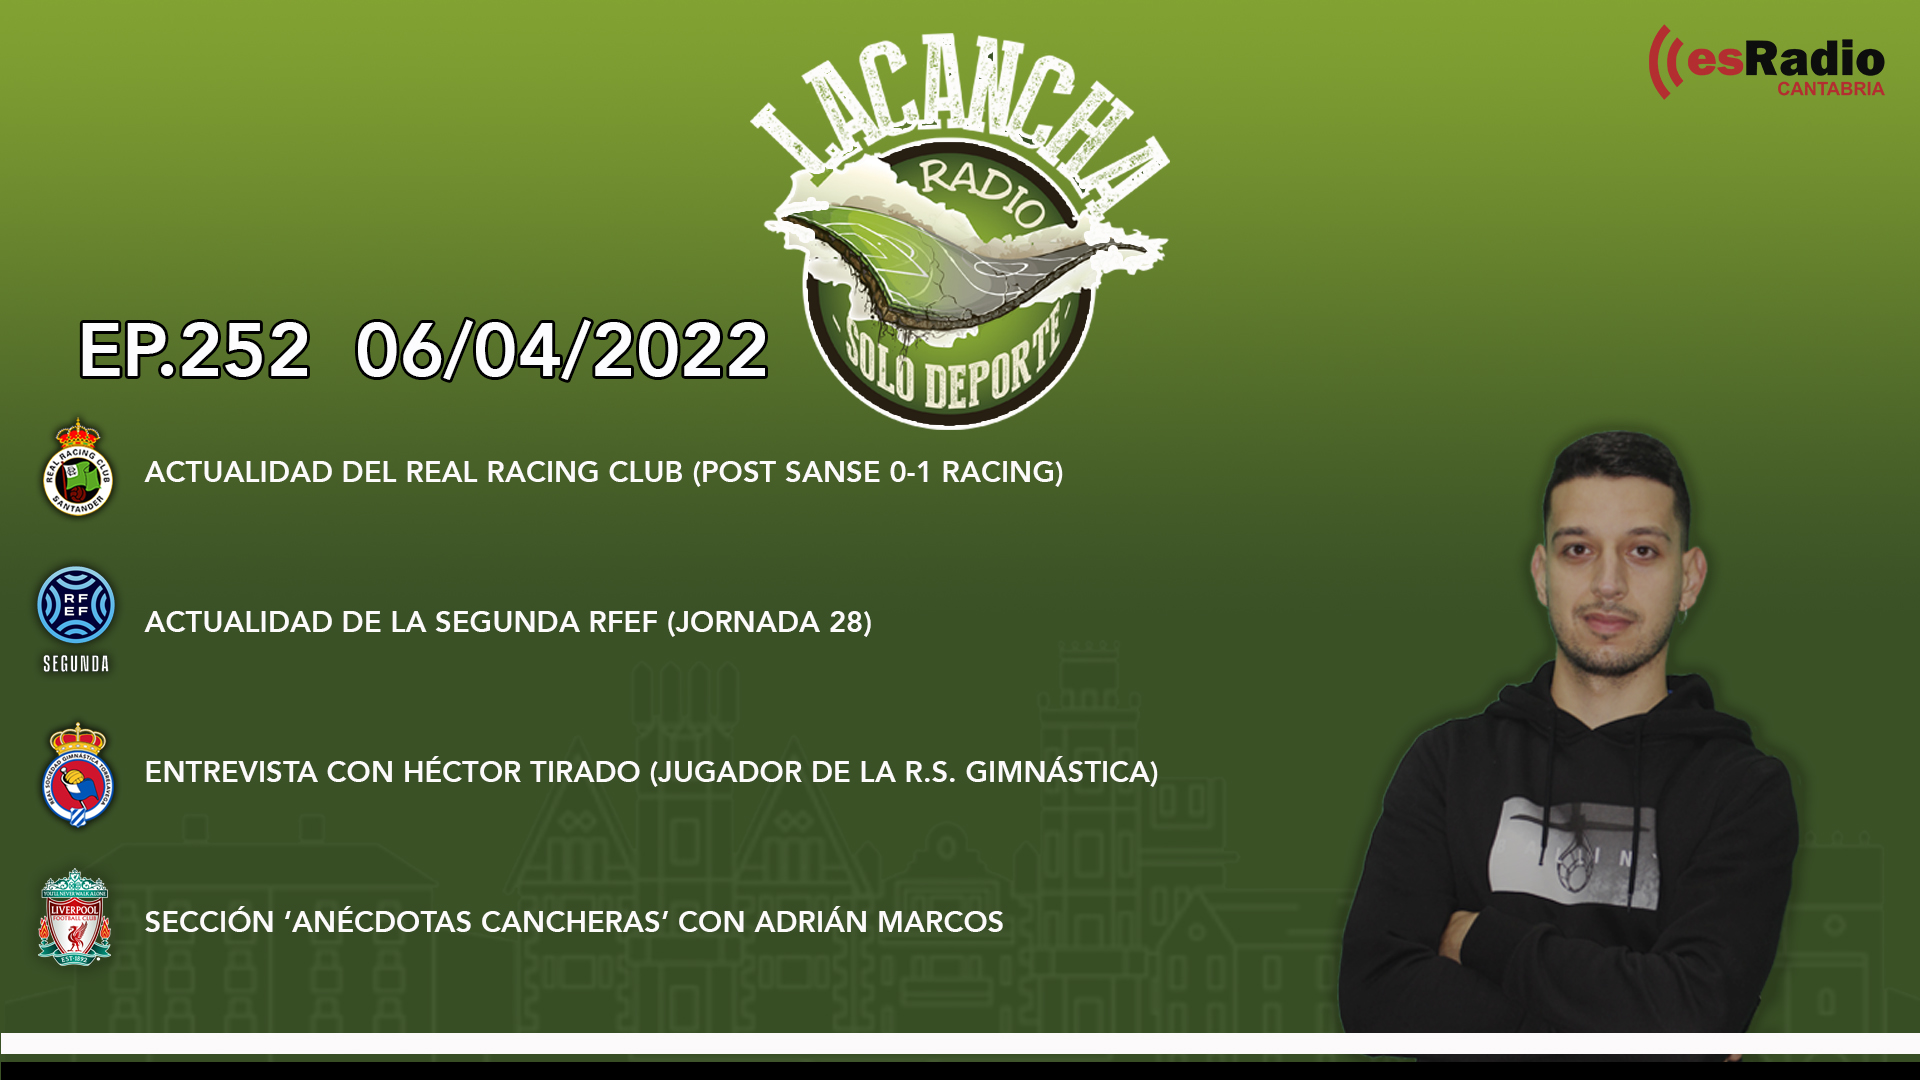 La Cancha Ep. 252 (06/04/2022)